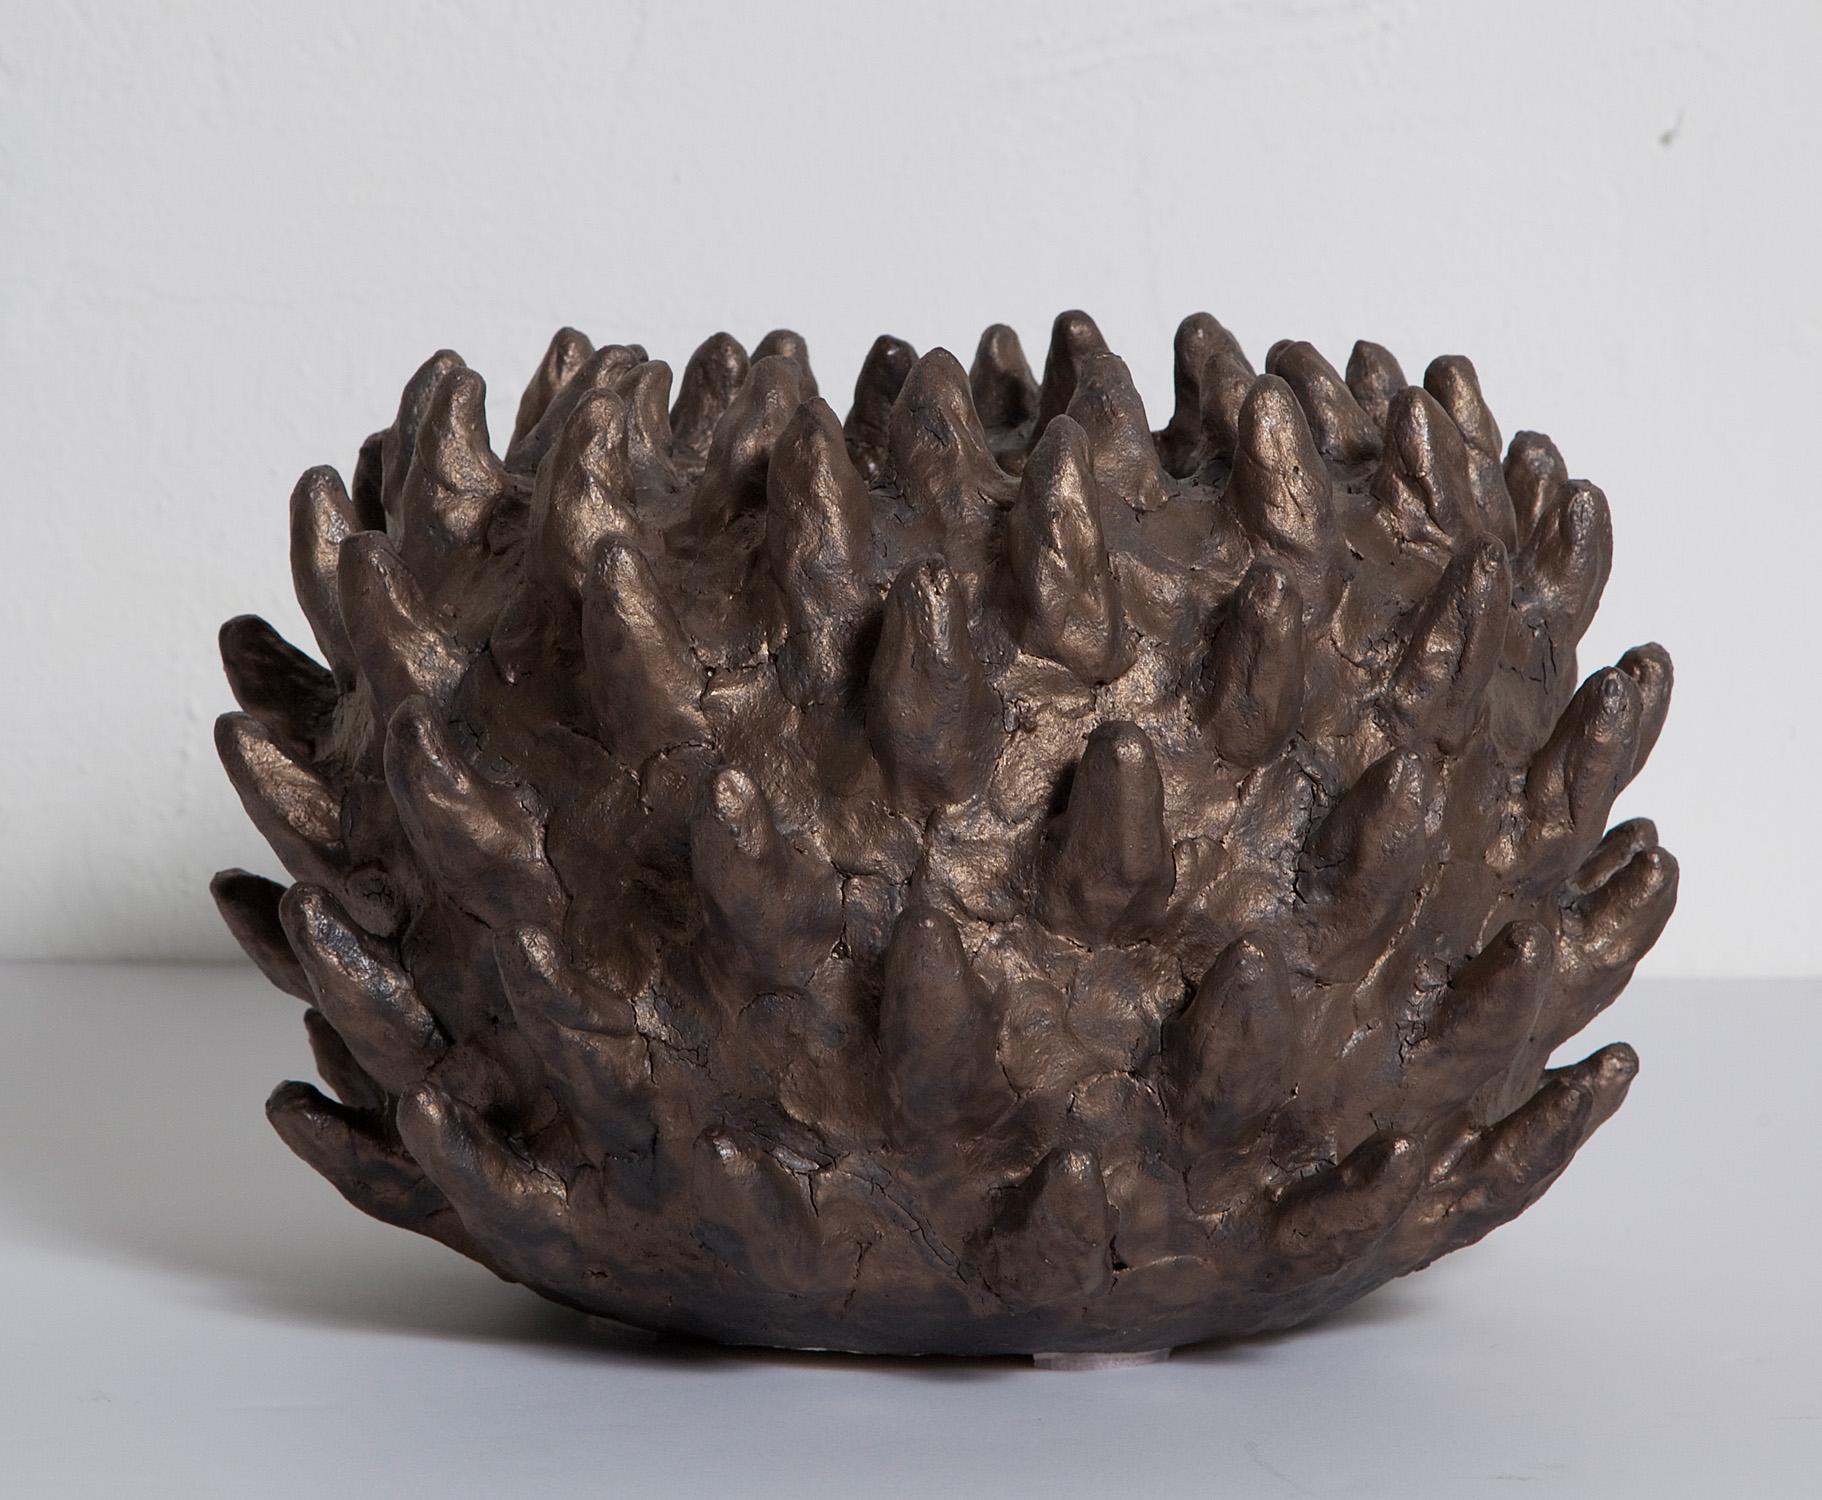 Large bronze-glazed horned ceramic bowl, handmade exclusively for stripe vintage modern by artisan Priscilla Hollingsworth.